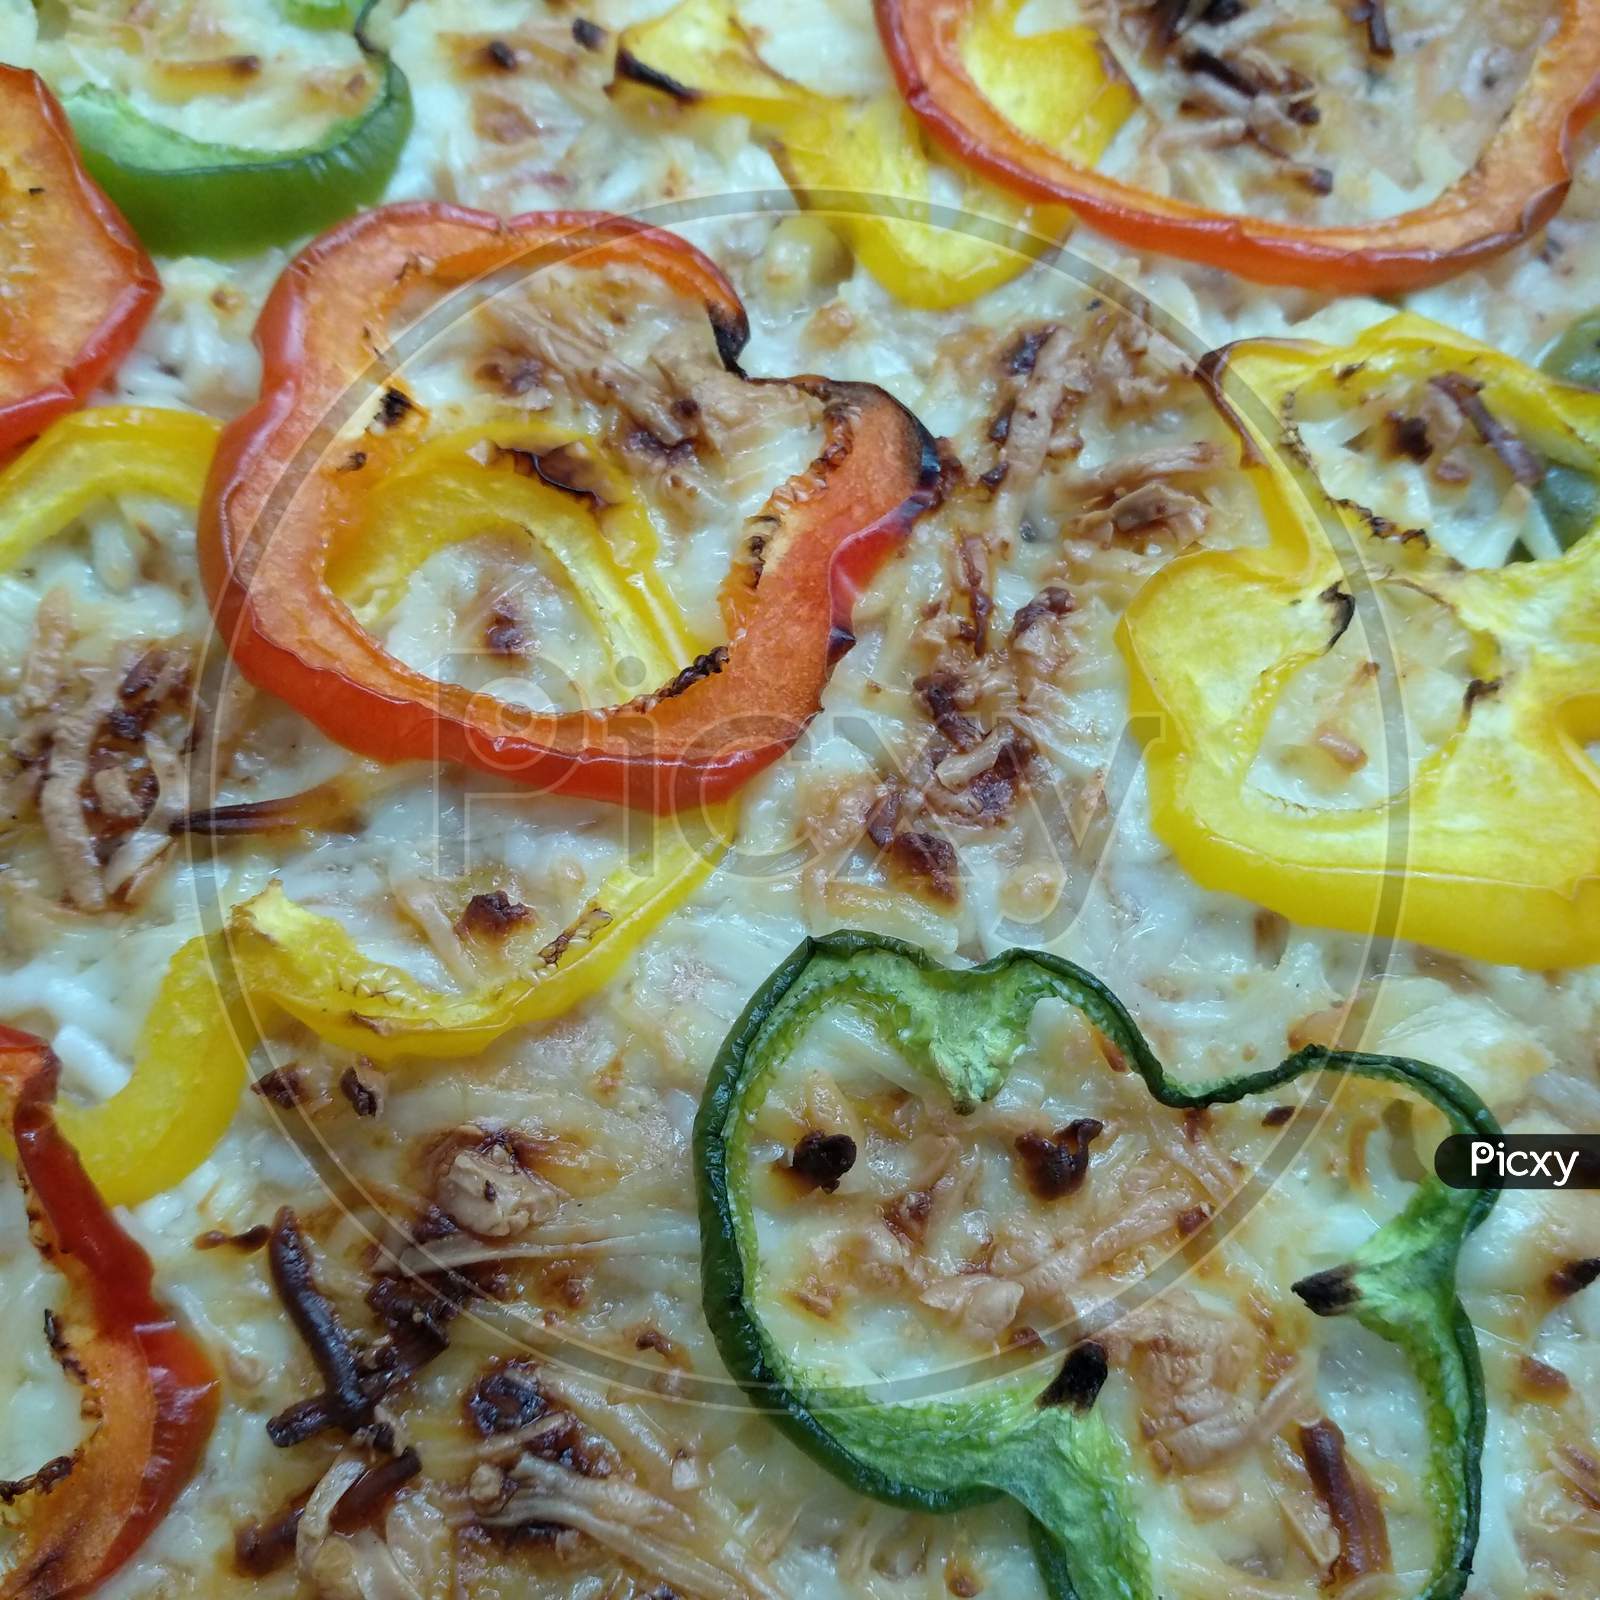 Veg cheese bake dish Closeup photo also look like Pizza